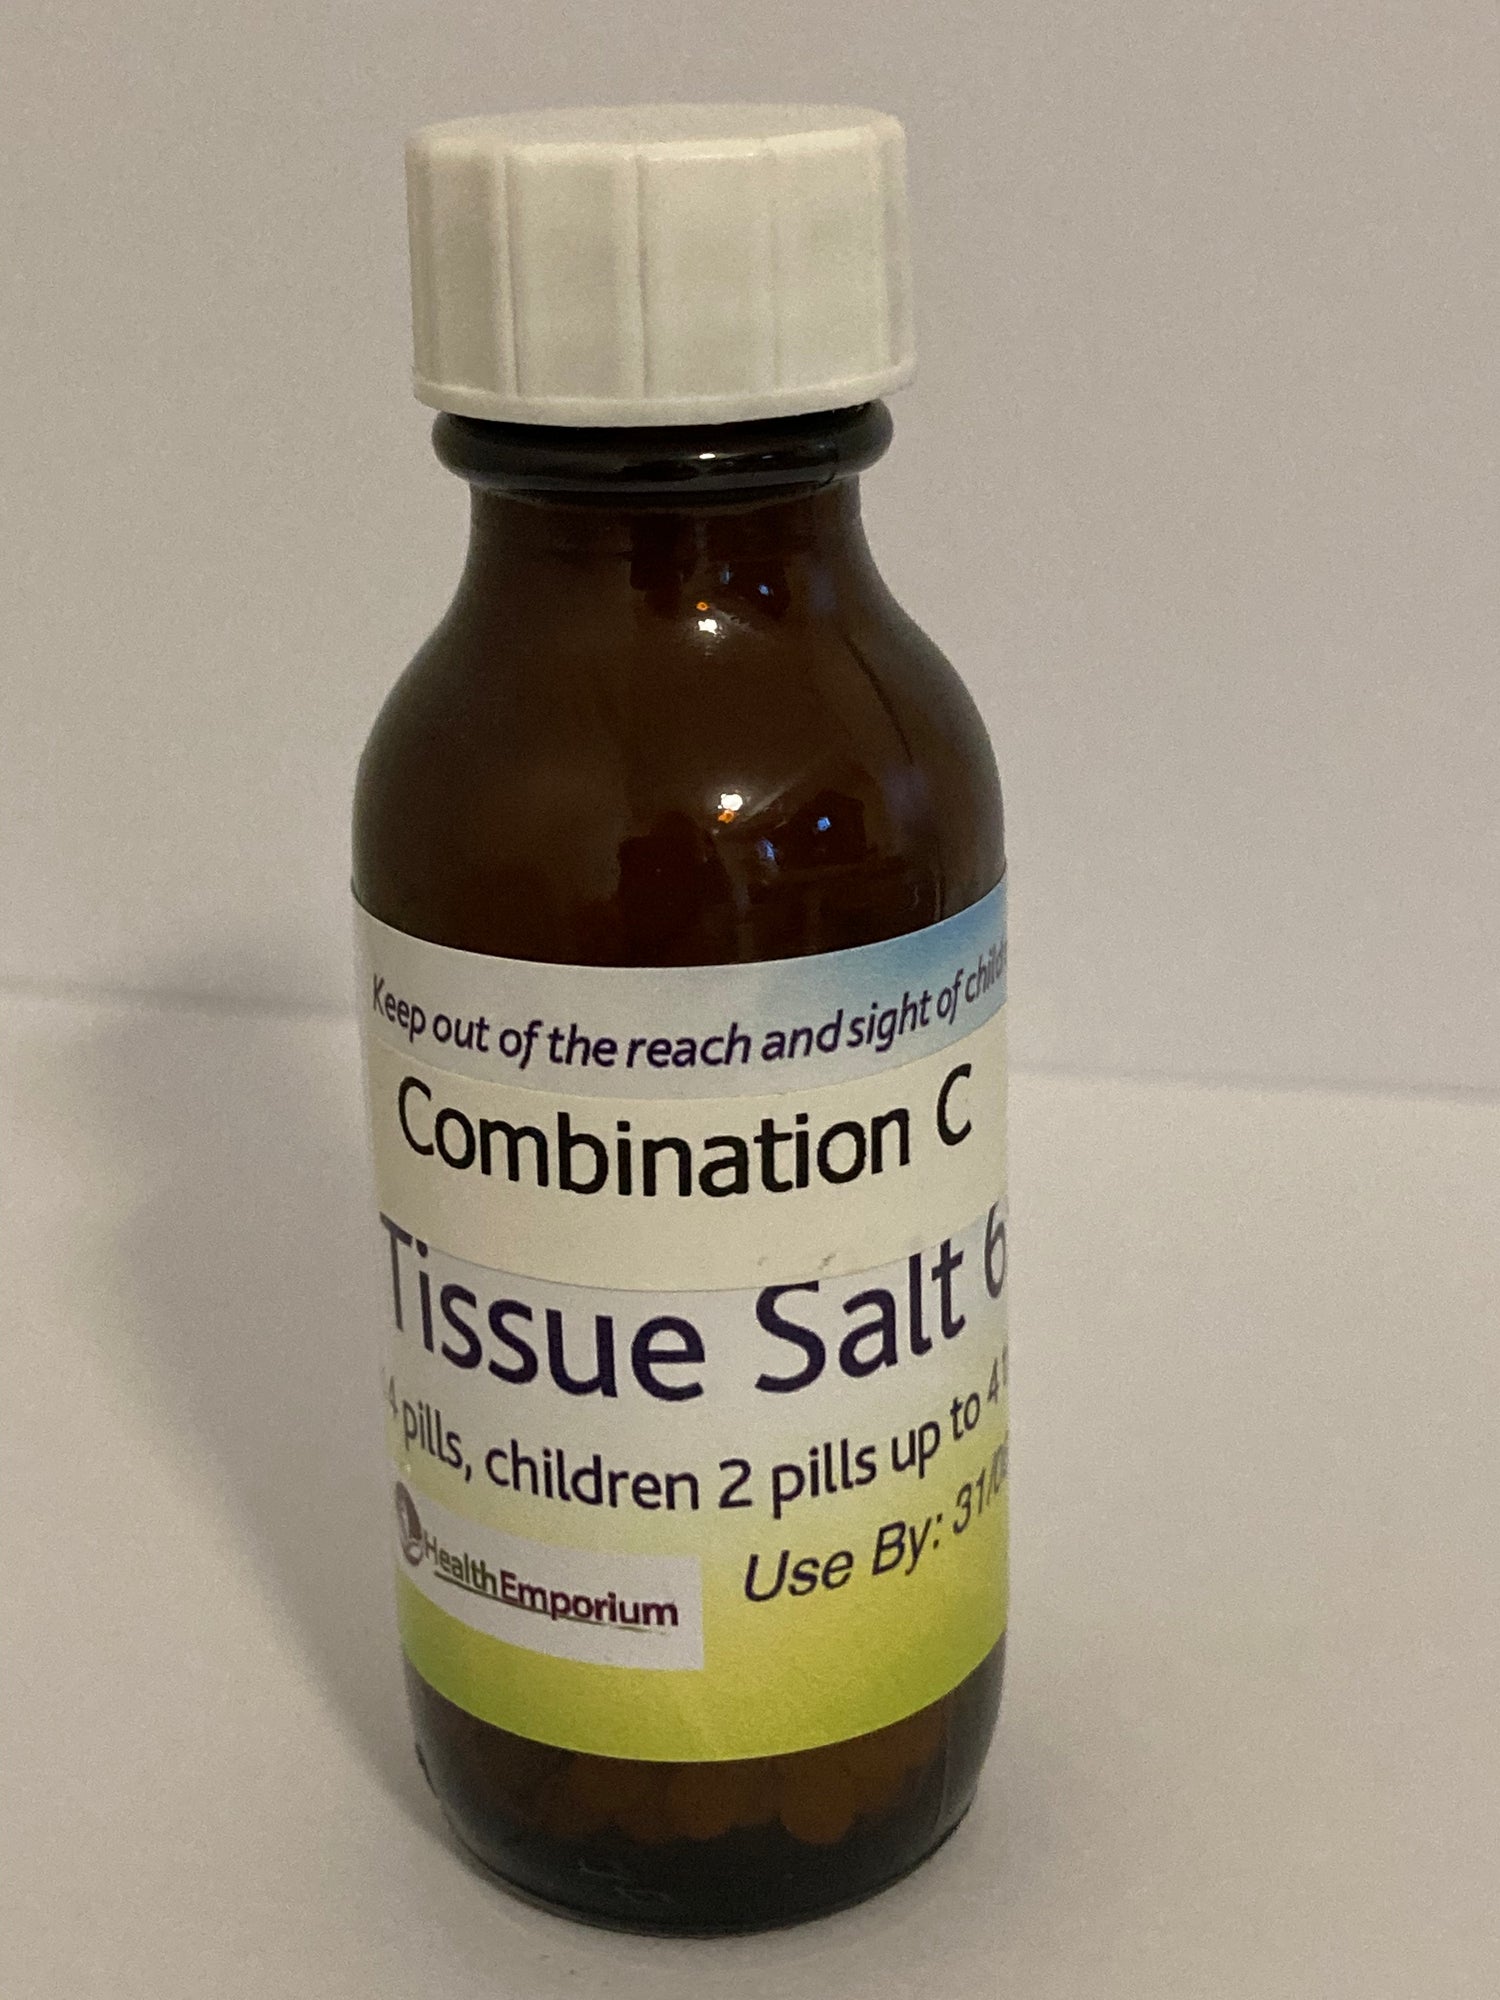 Combination C Tissue Salt Soft